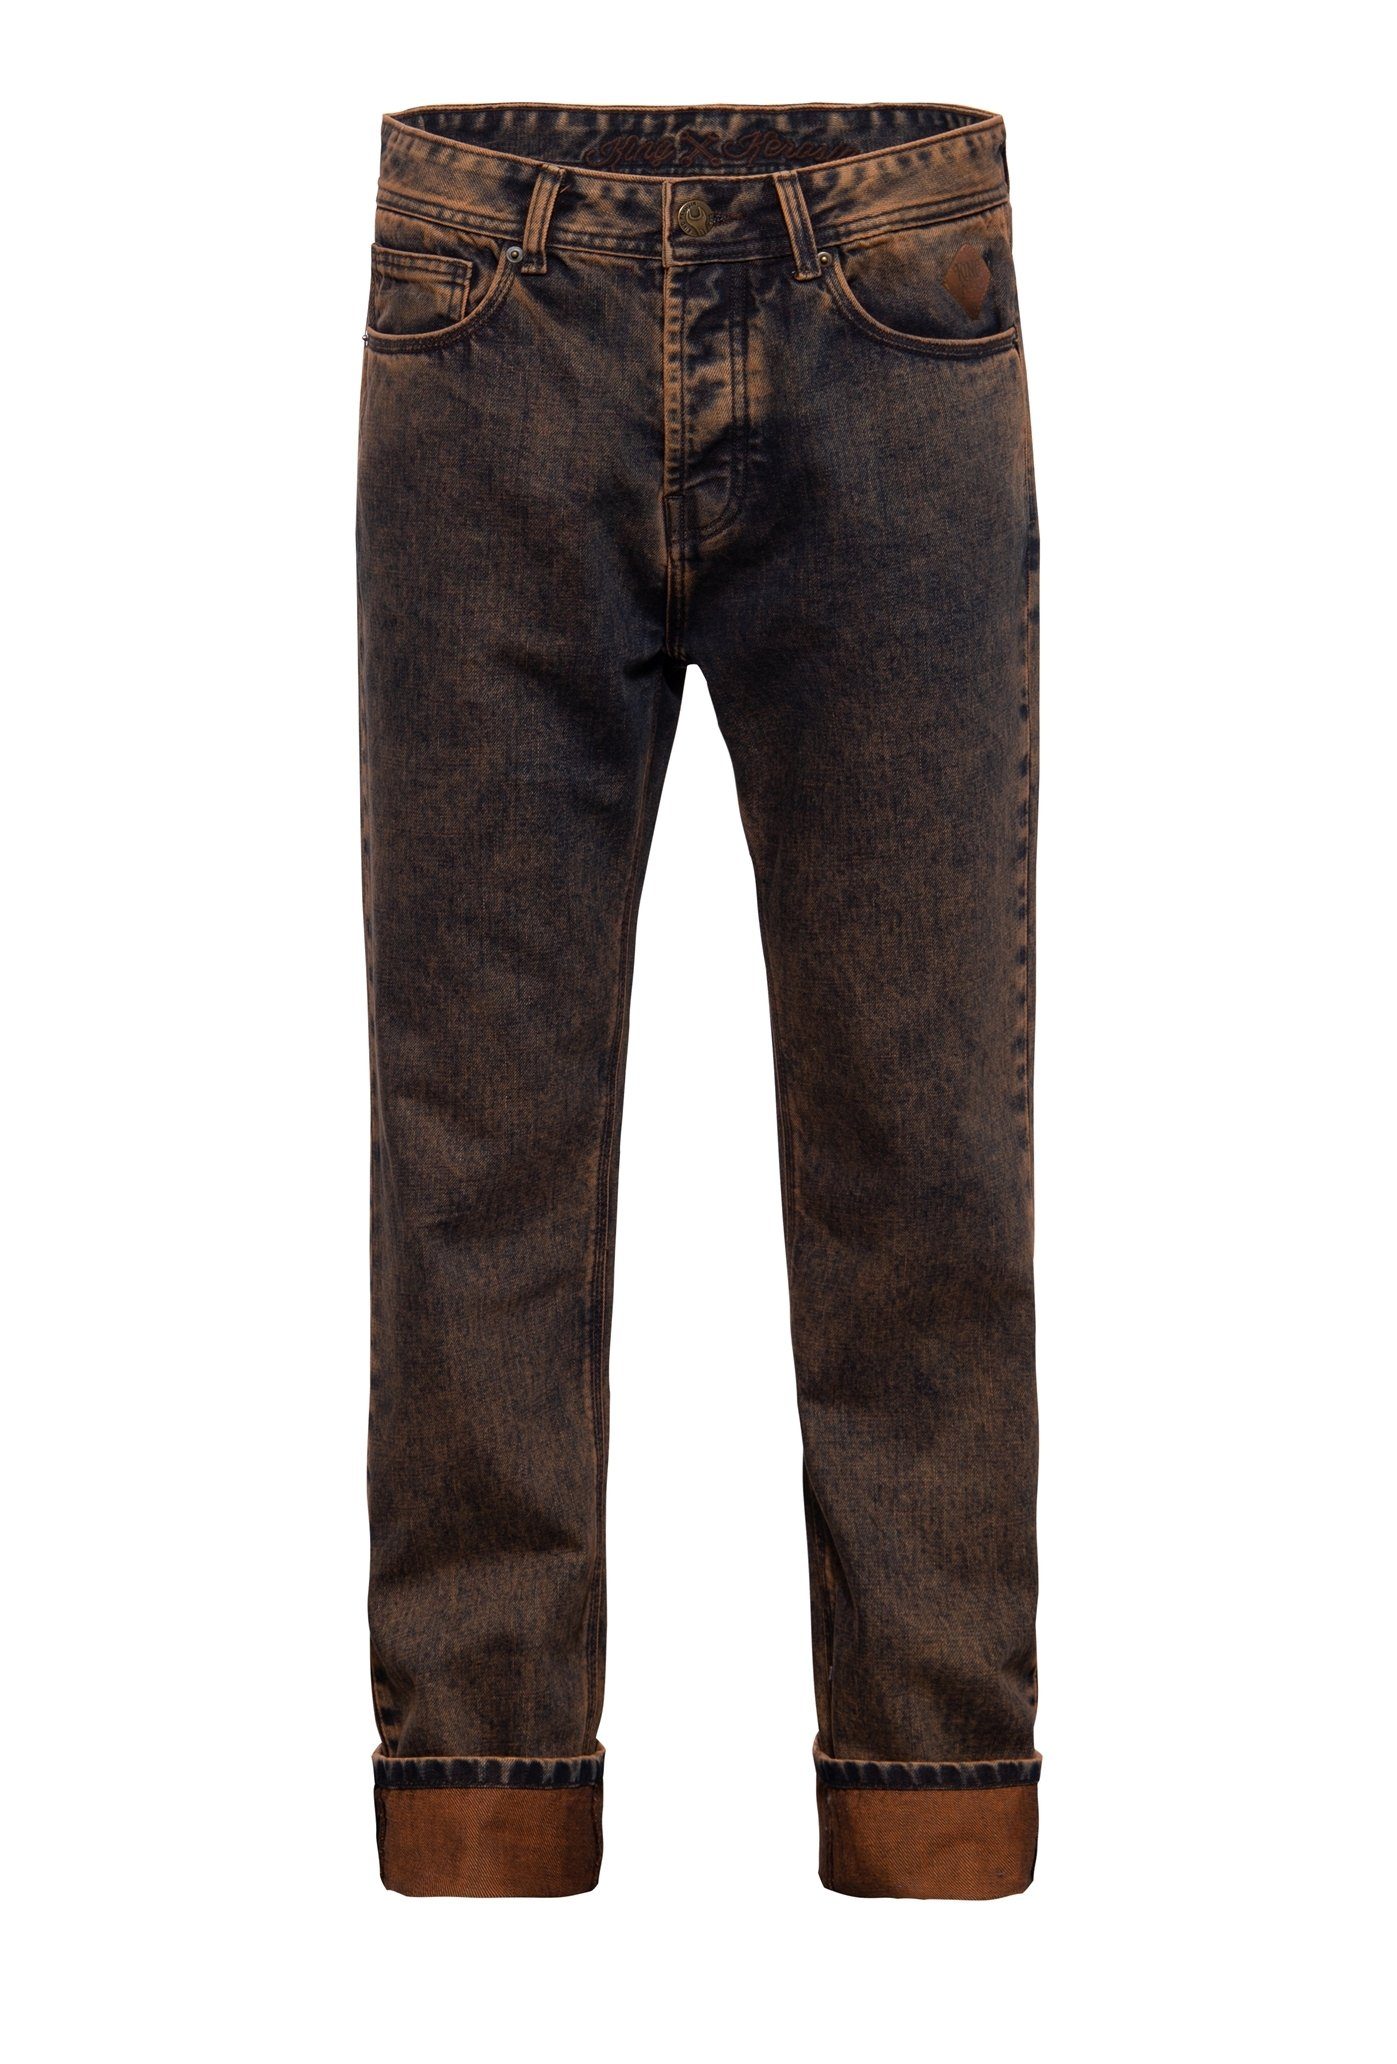 KingKerosin 5-Pocket-Jeans Scott Dirt Washed rostbraun